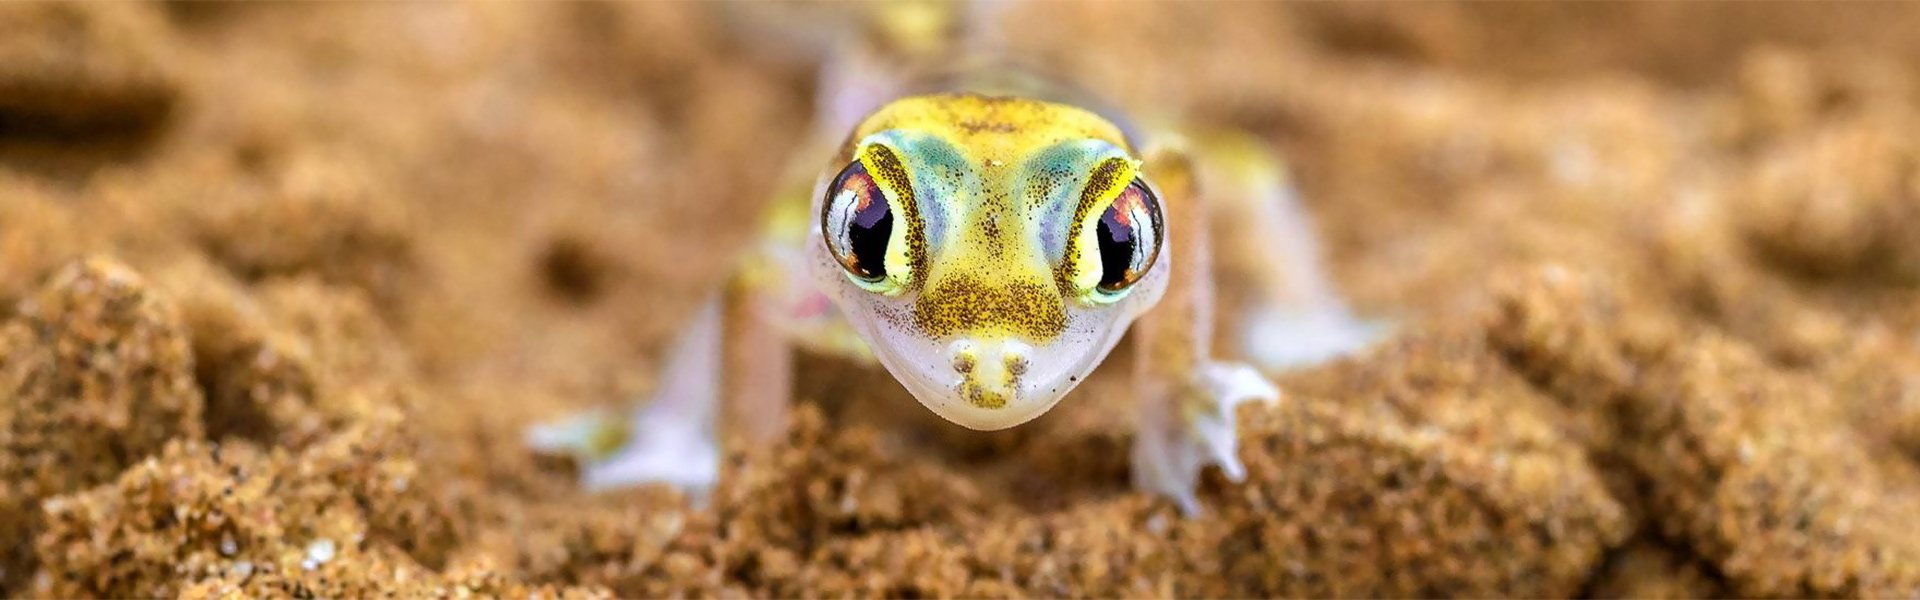 Gecko im Sand |  Peter Pack, Pack Safari / Chamleon